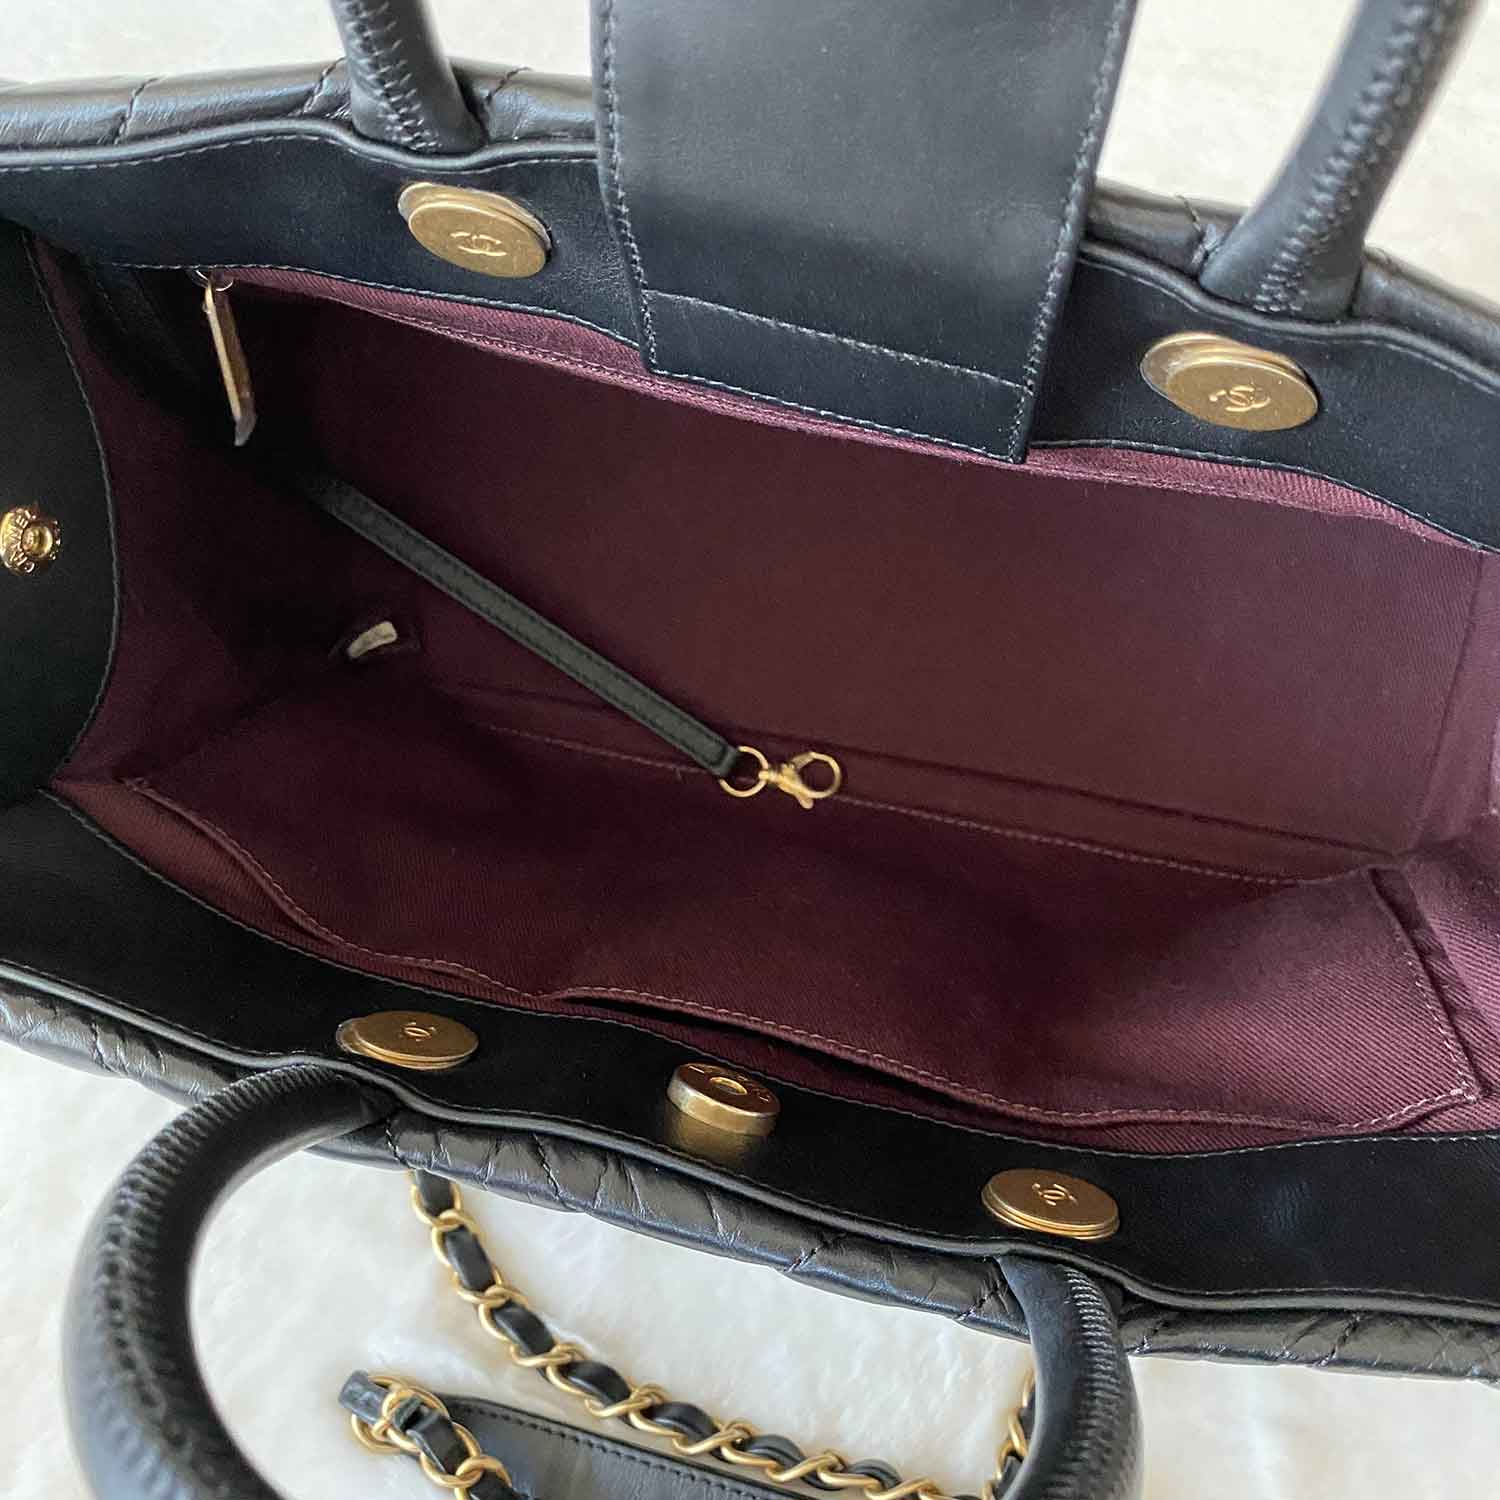 Shop authentic Chanel Coco Allure Chevron Shopping Tote Bag at revogue ...